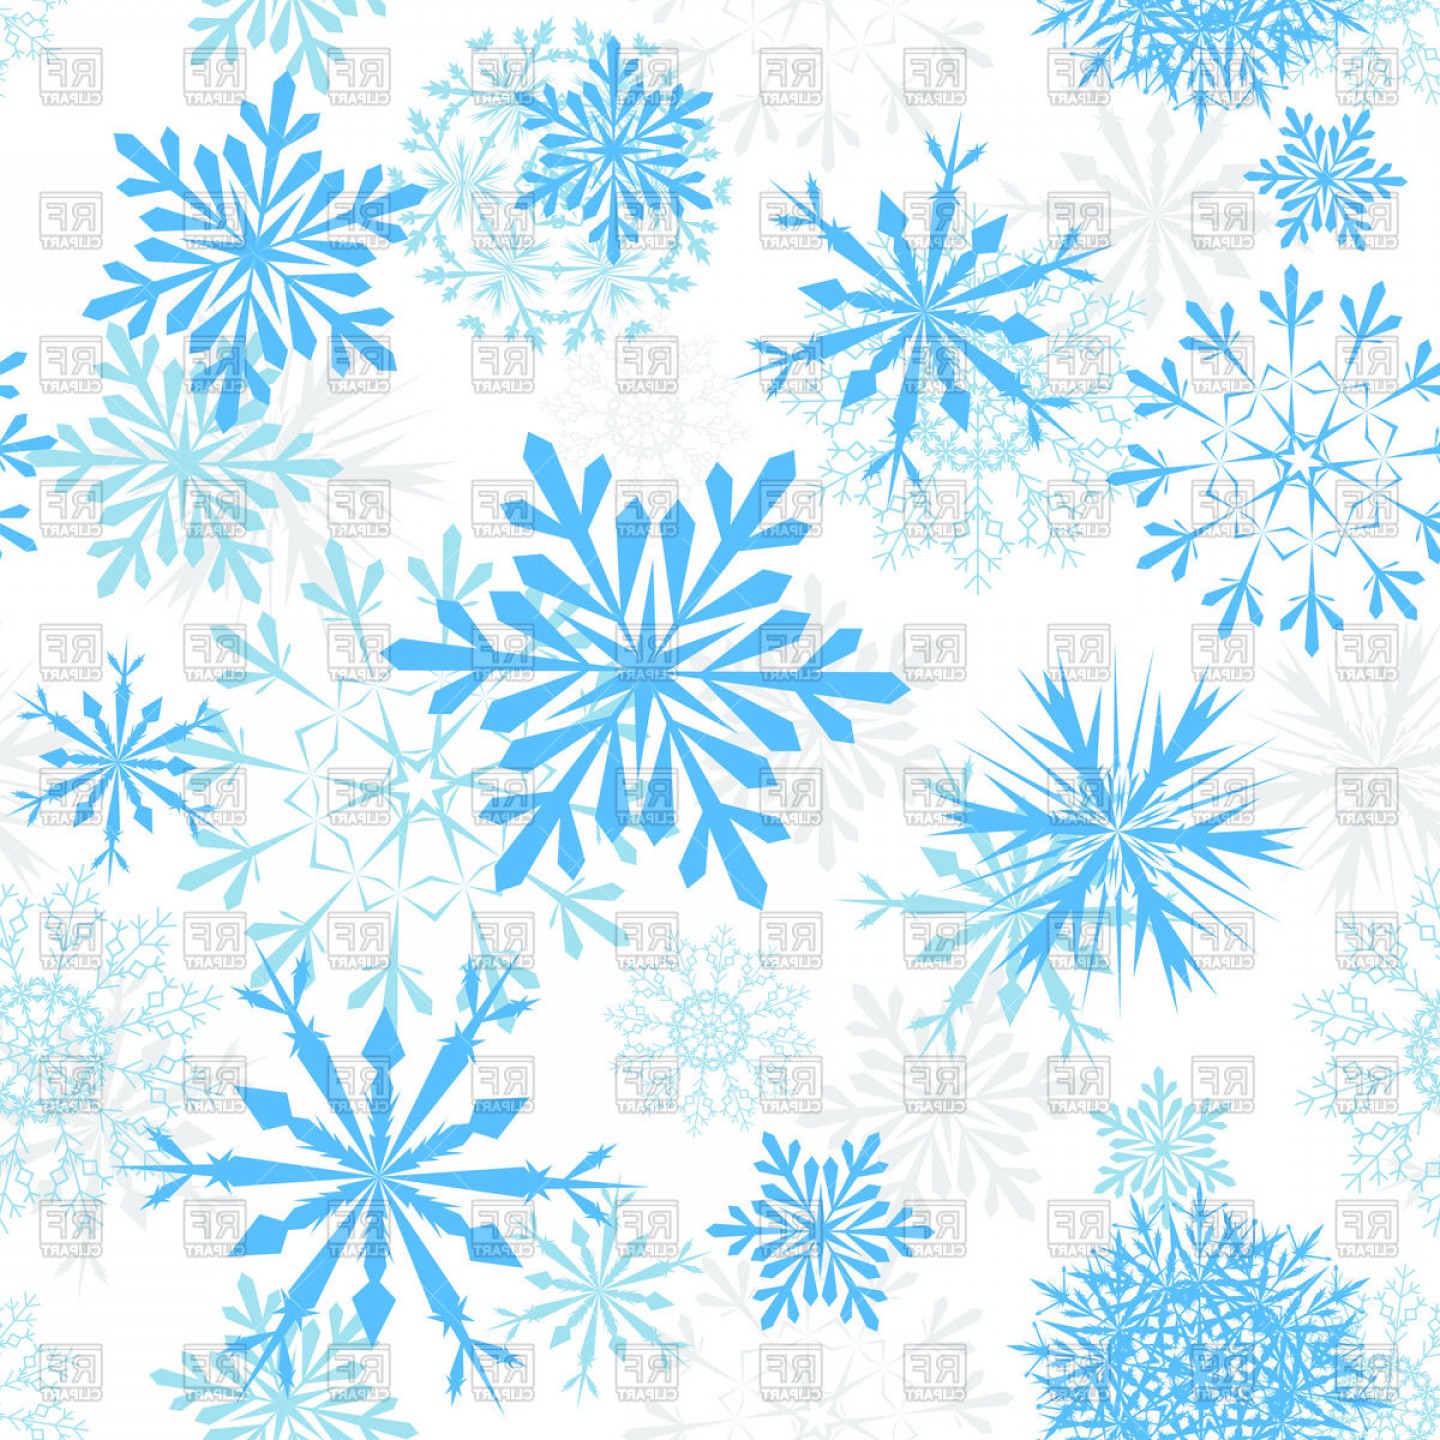 Blue snowflakes background.